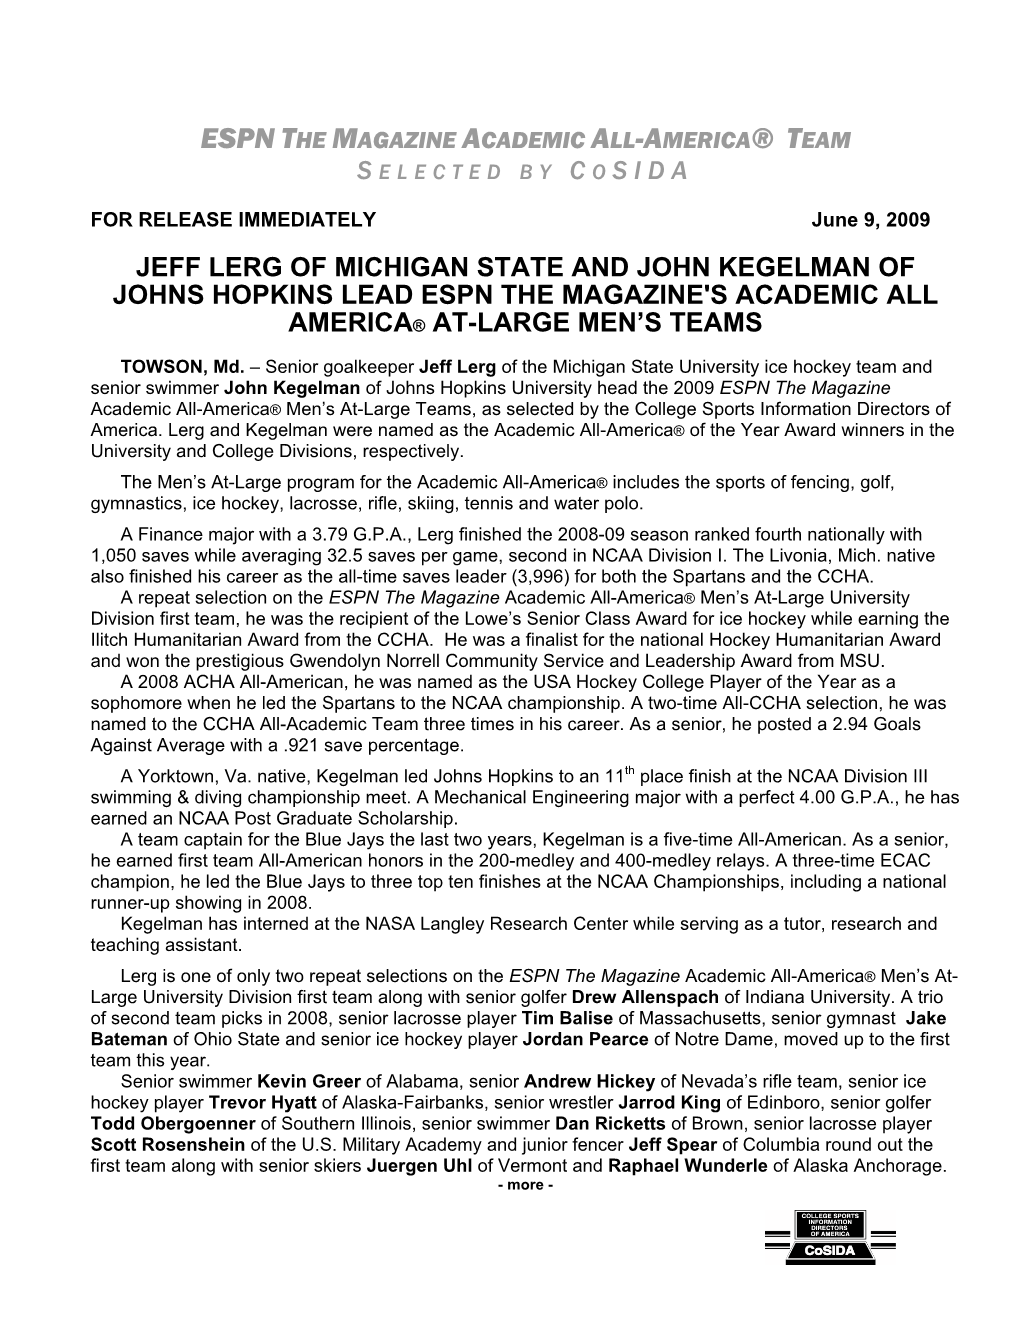 Jeff Lerg of Michigan State and John Kegelman of Johns Hopkins Lead Espn the Magazine's Academic All America® At-Large Men's